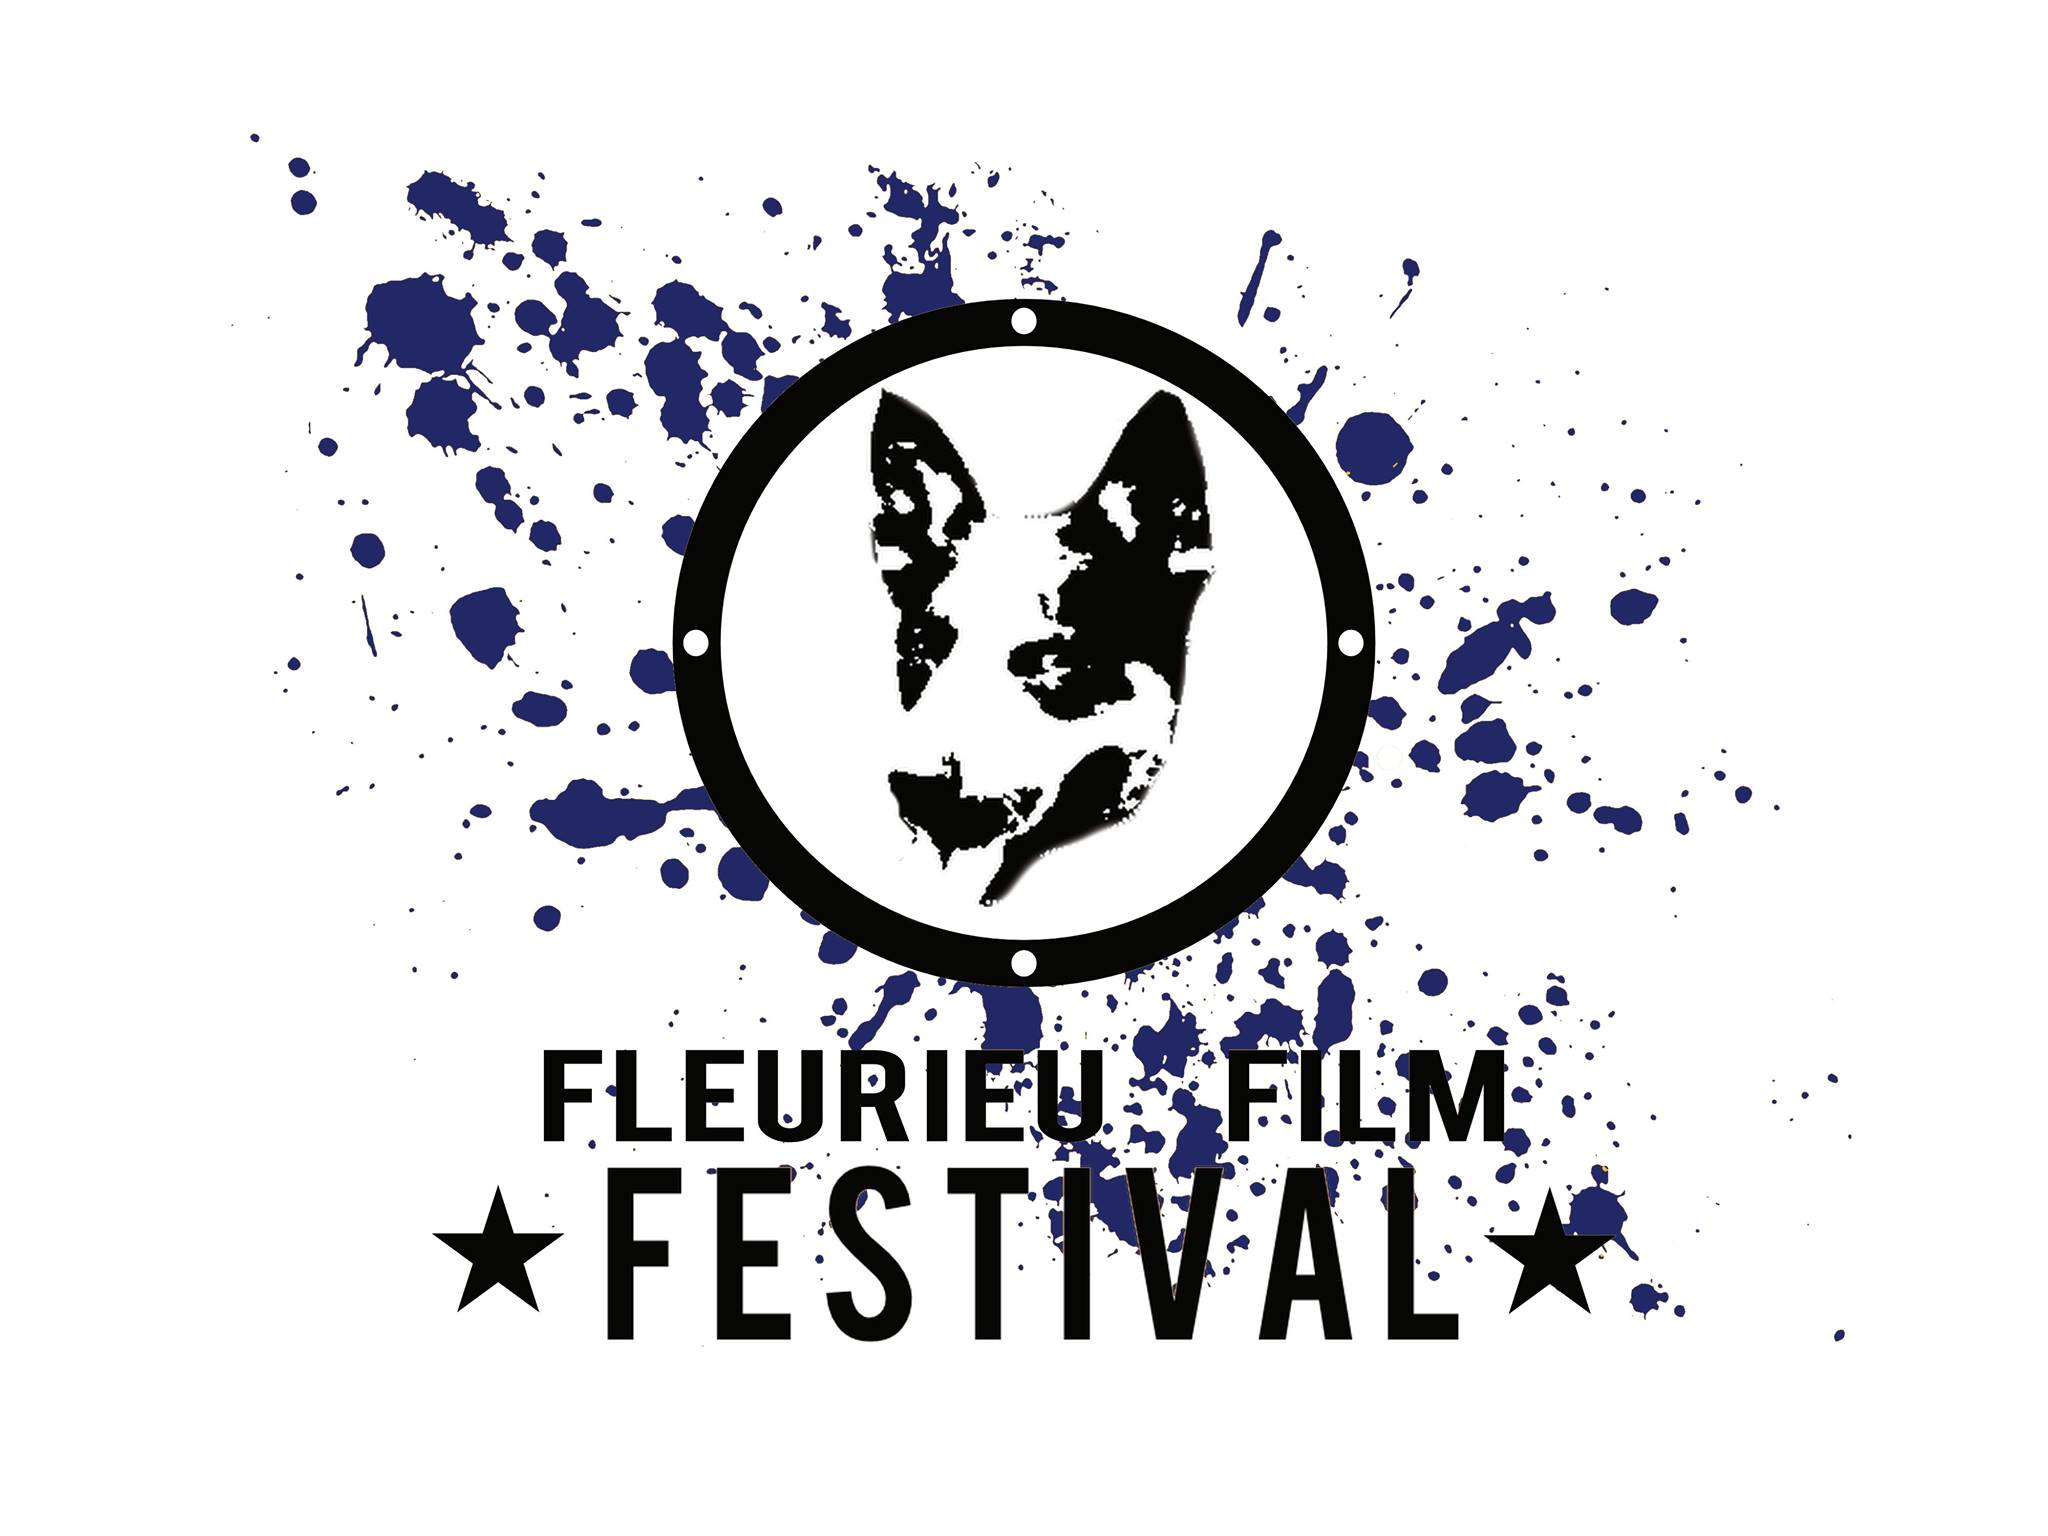 Fleurieu Film Festival - Great Ocean Road Tourism